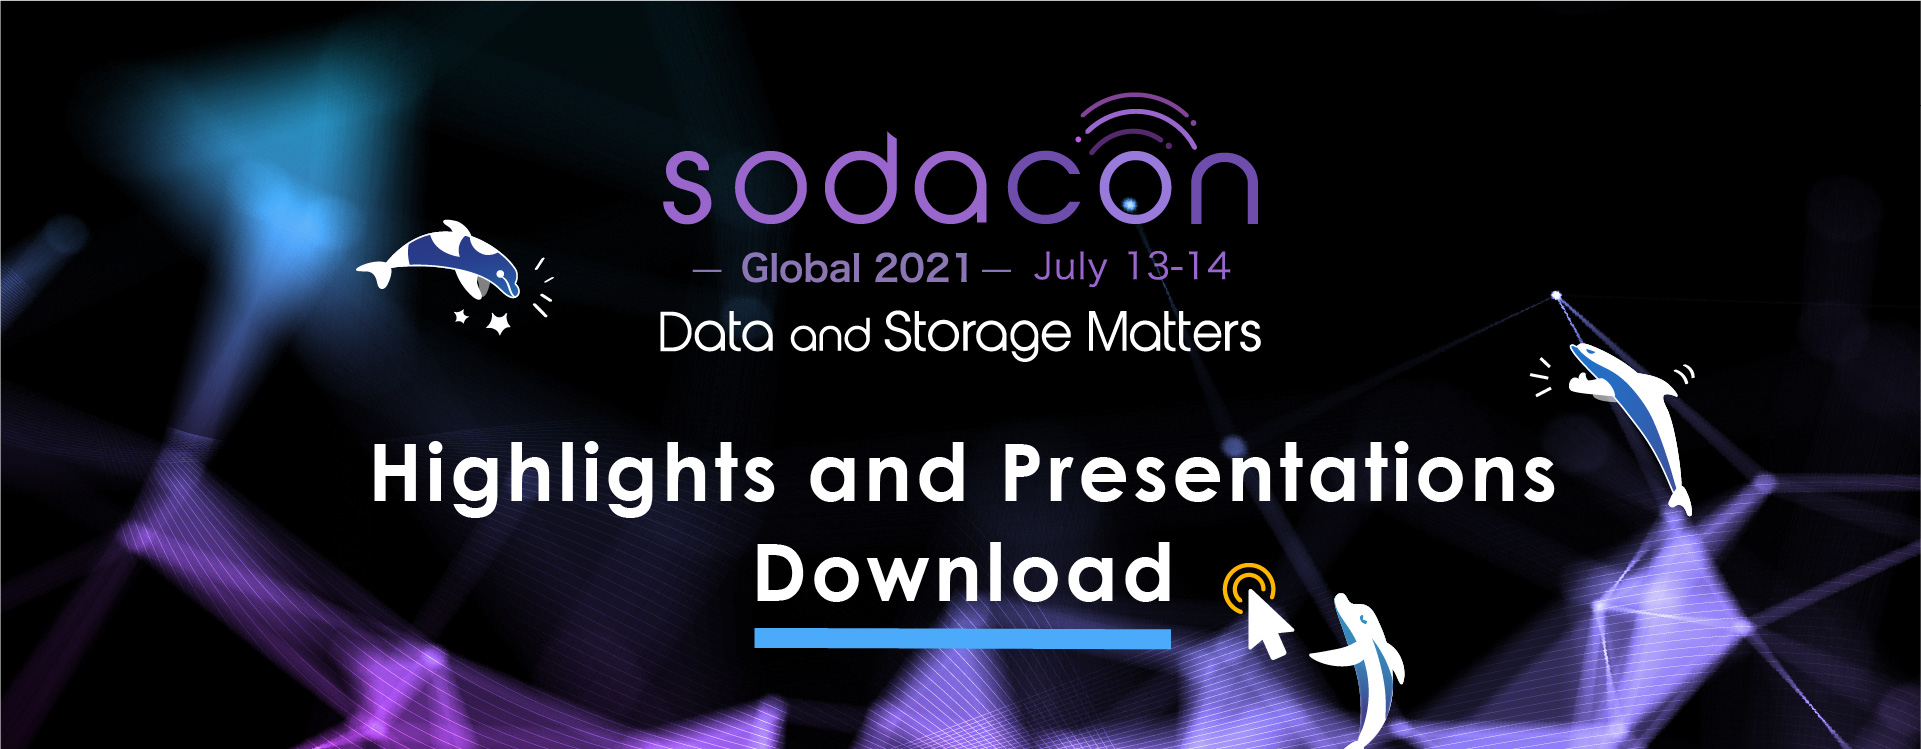 SODACON Global 2021